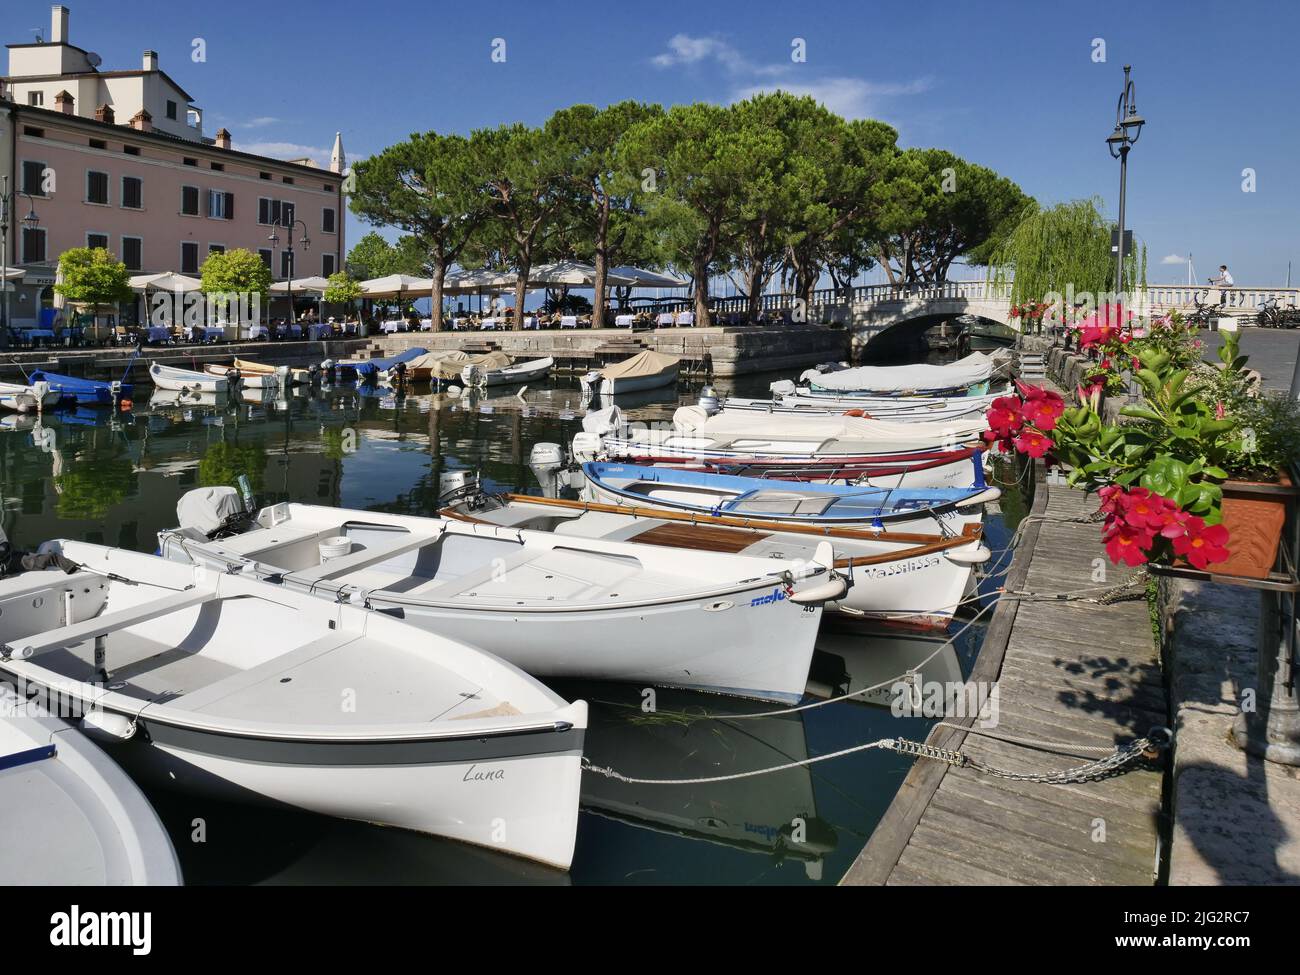 Old harbour full of boats in Desenzano del Garda. Brescia, Lombardy, Italy. City Centre of Desenzano on Lake Garda. Stock Photo